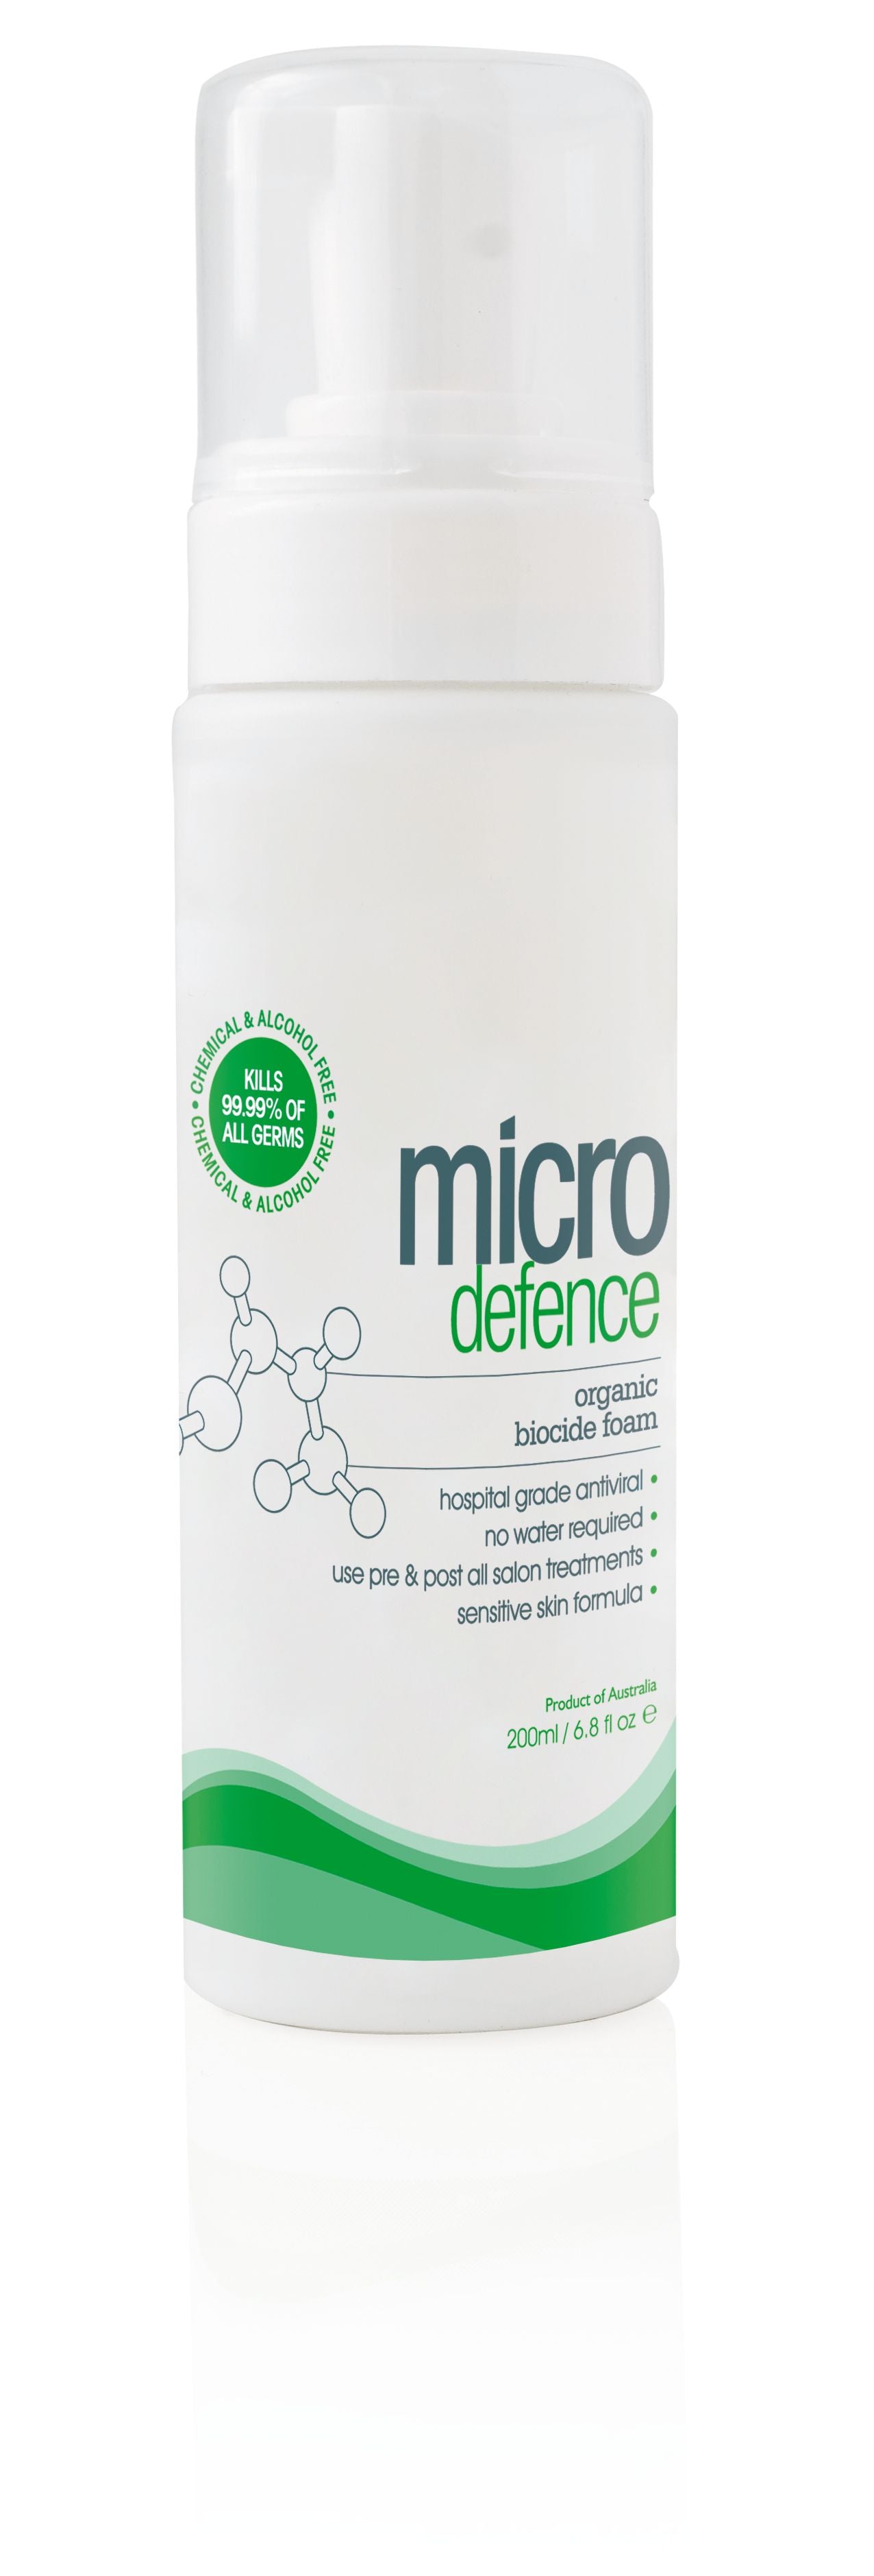 Caronlab Micro Defence Foam 200ml